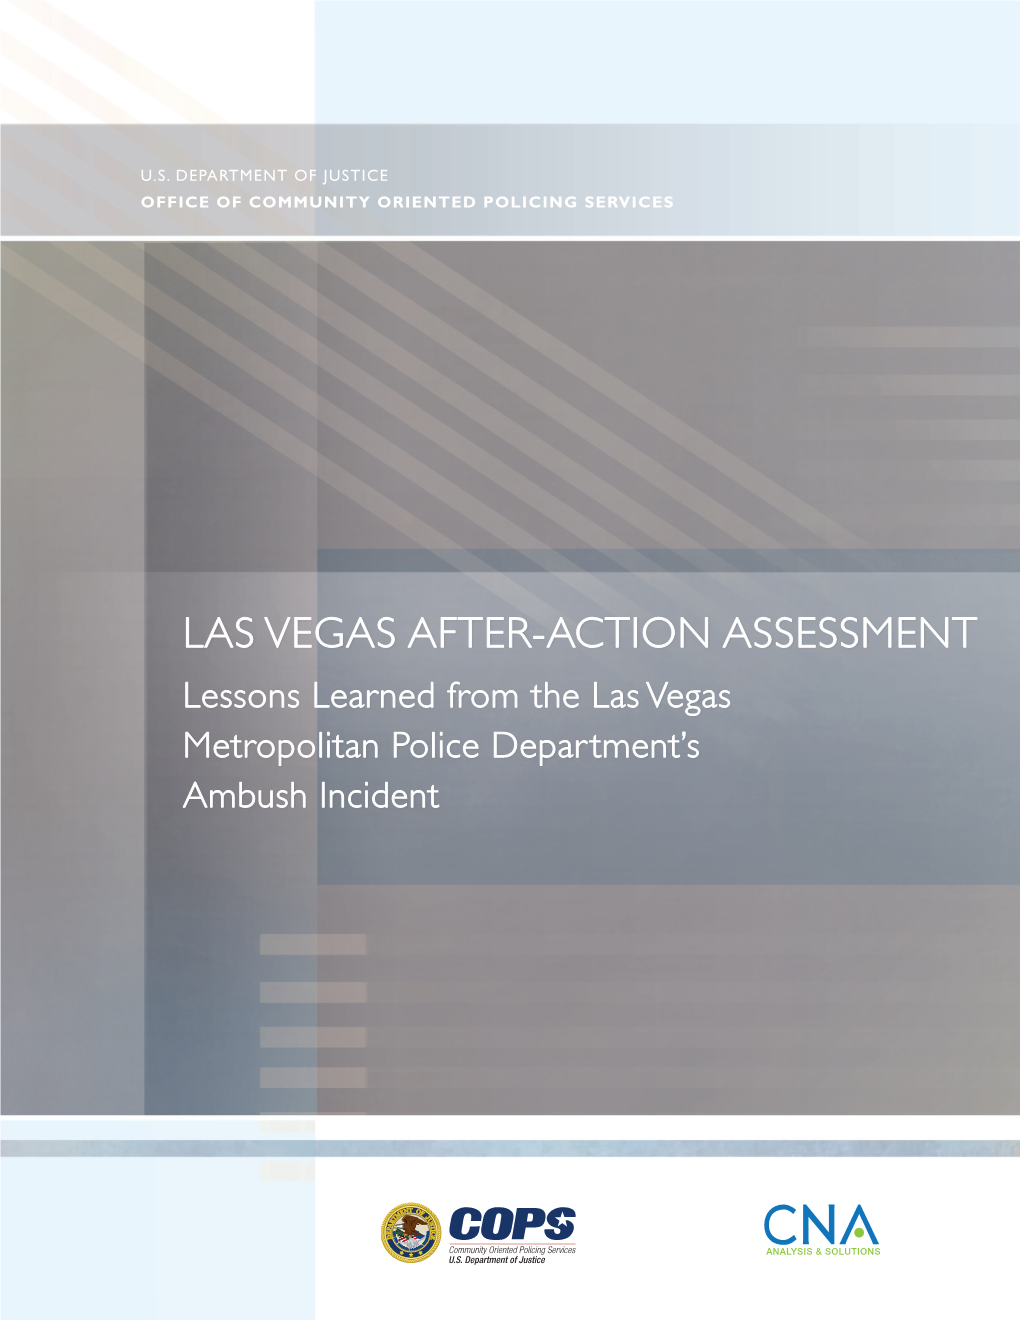 Las Vegas After-Action Assessment: Lessons Learned from the Las Vegas Metropolitan Police Department’S Ambush Incident